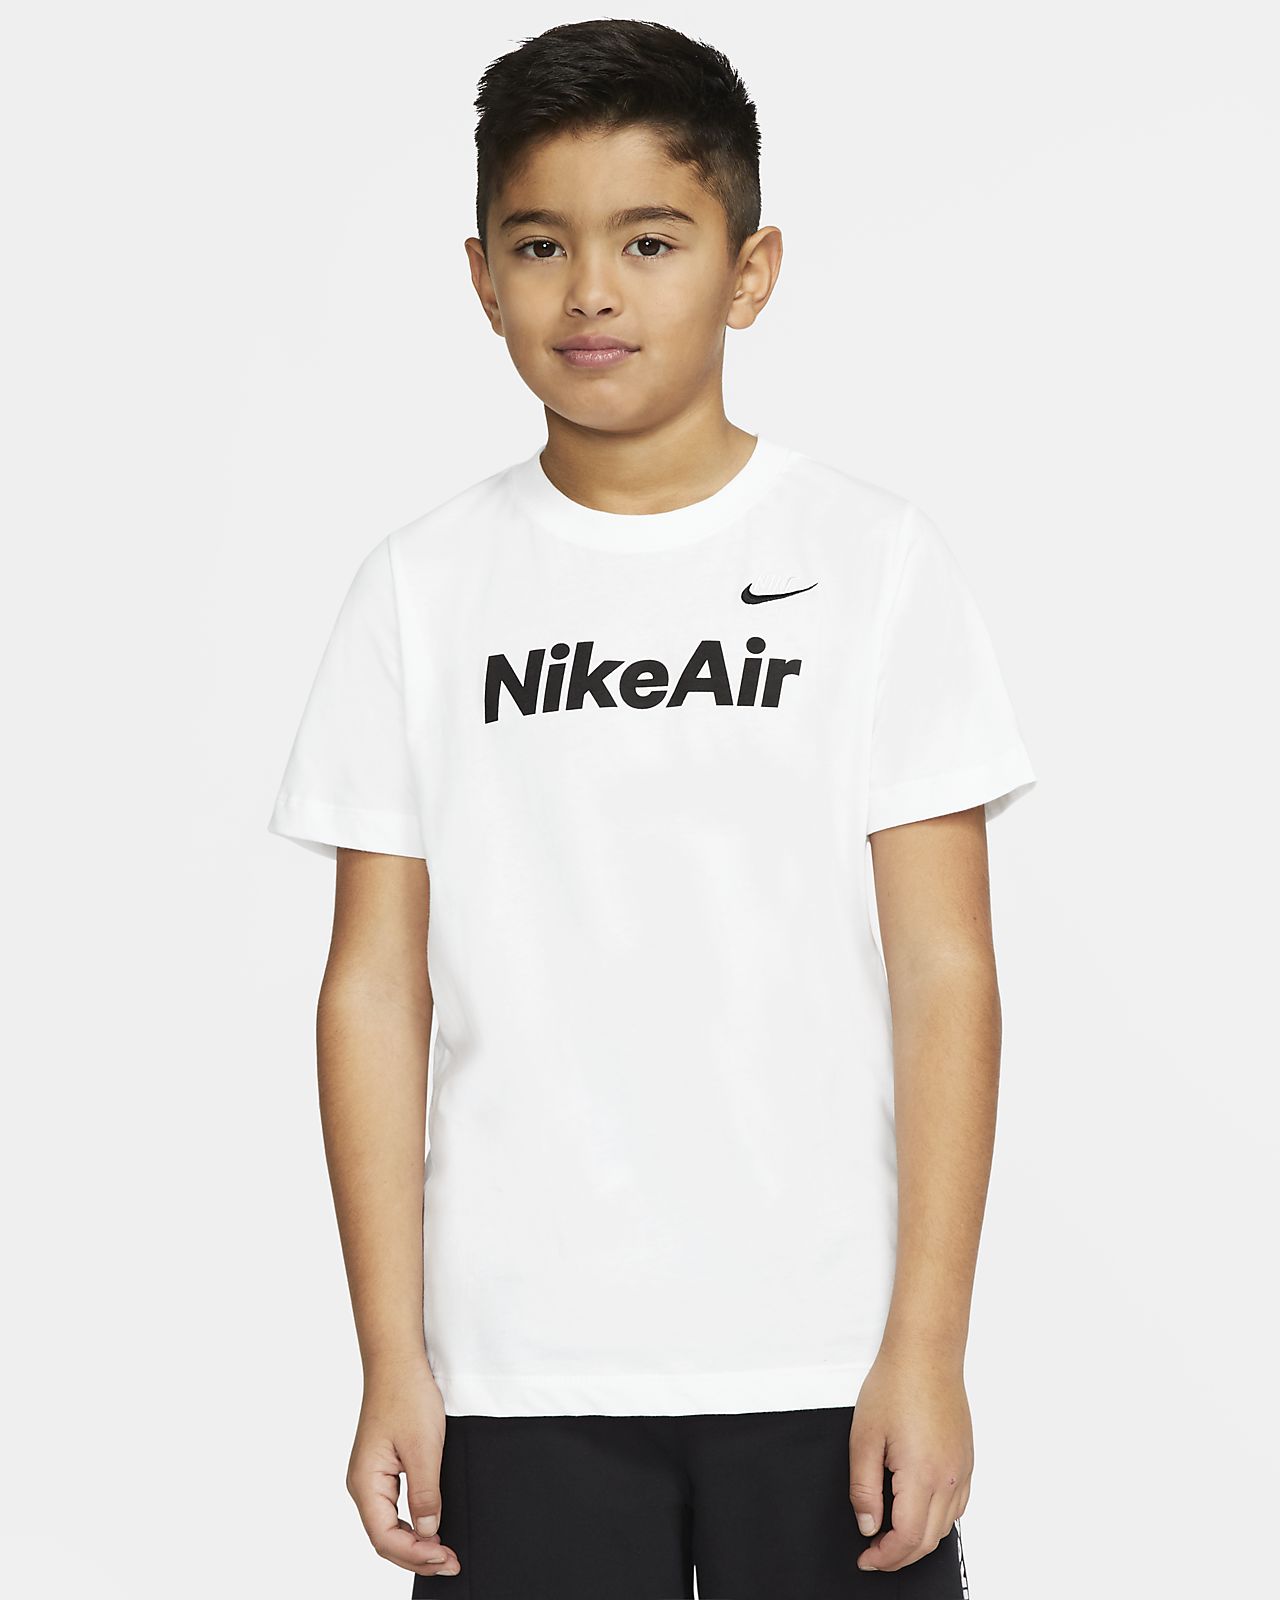 Nikeid T Shirt Off 66 Bonyadroudaki Com - roblox nike shirts id coolmine community school